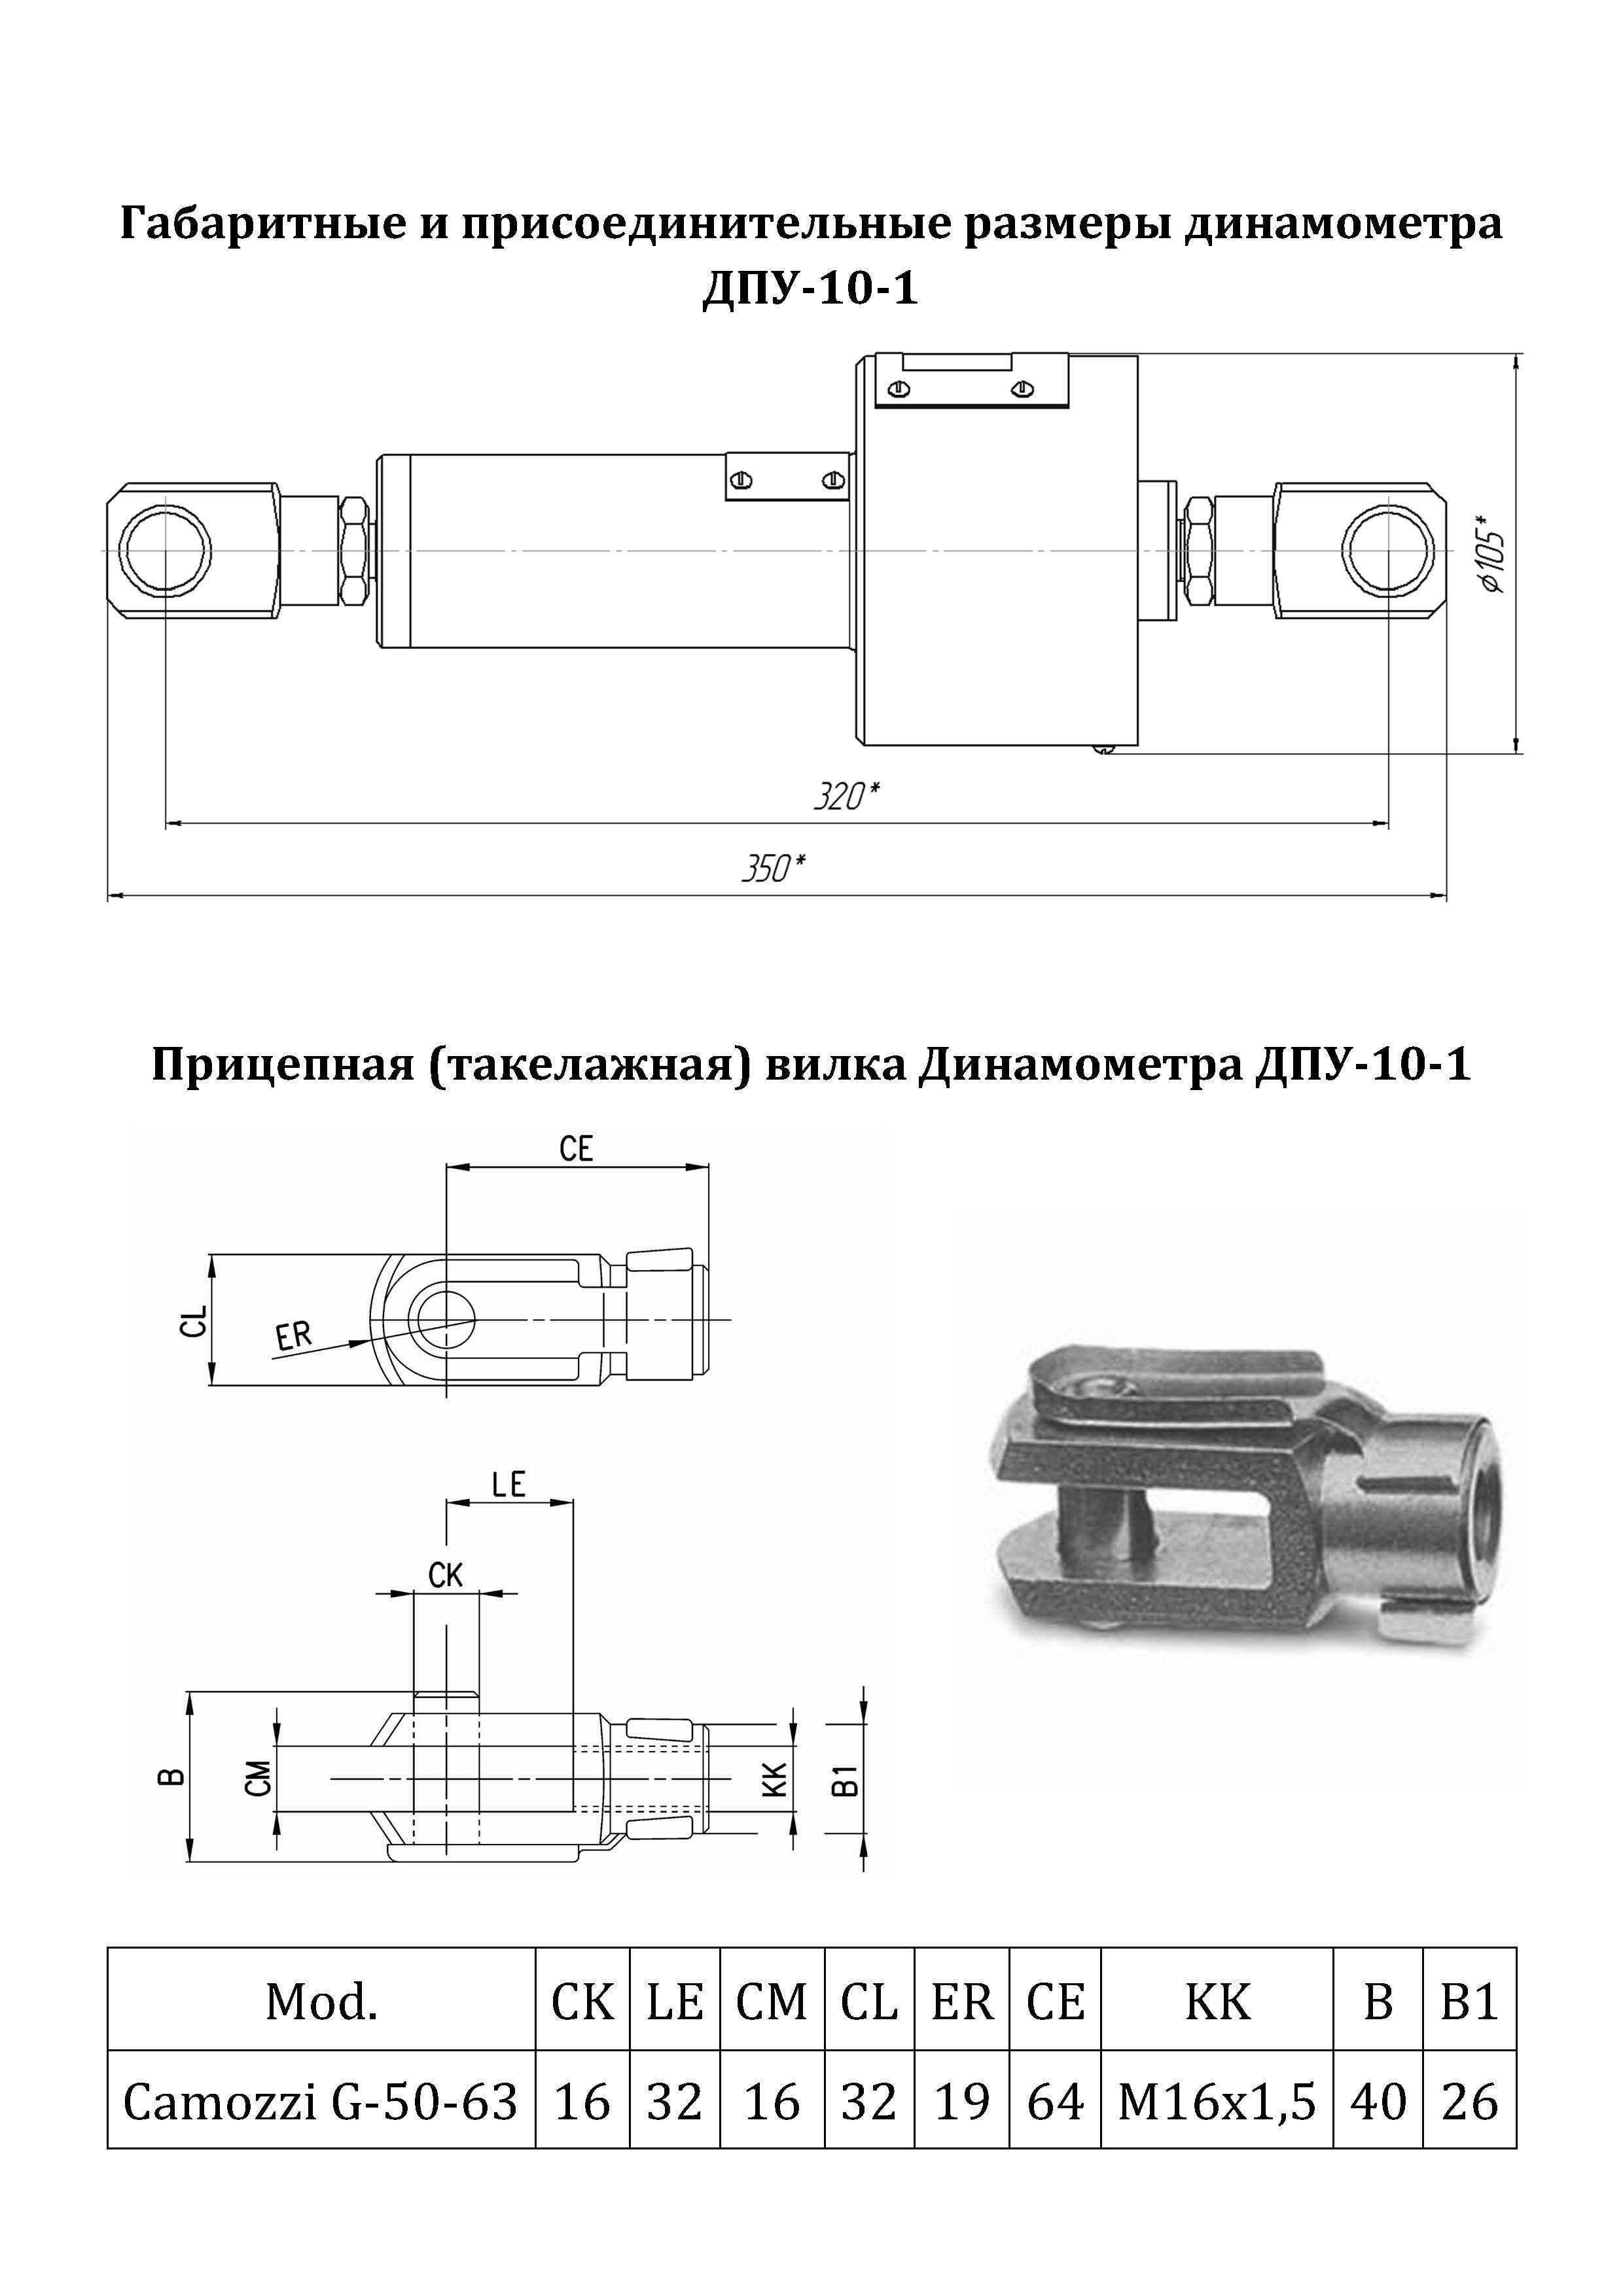 Динамометр ДПУ-10-1